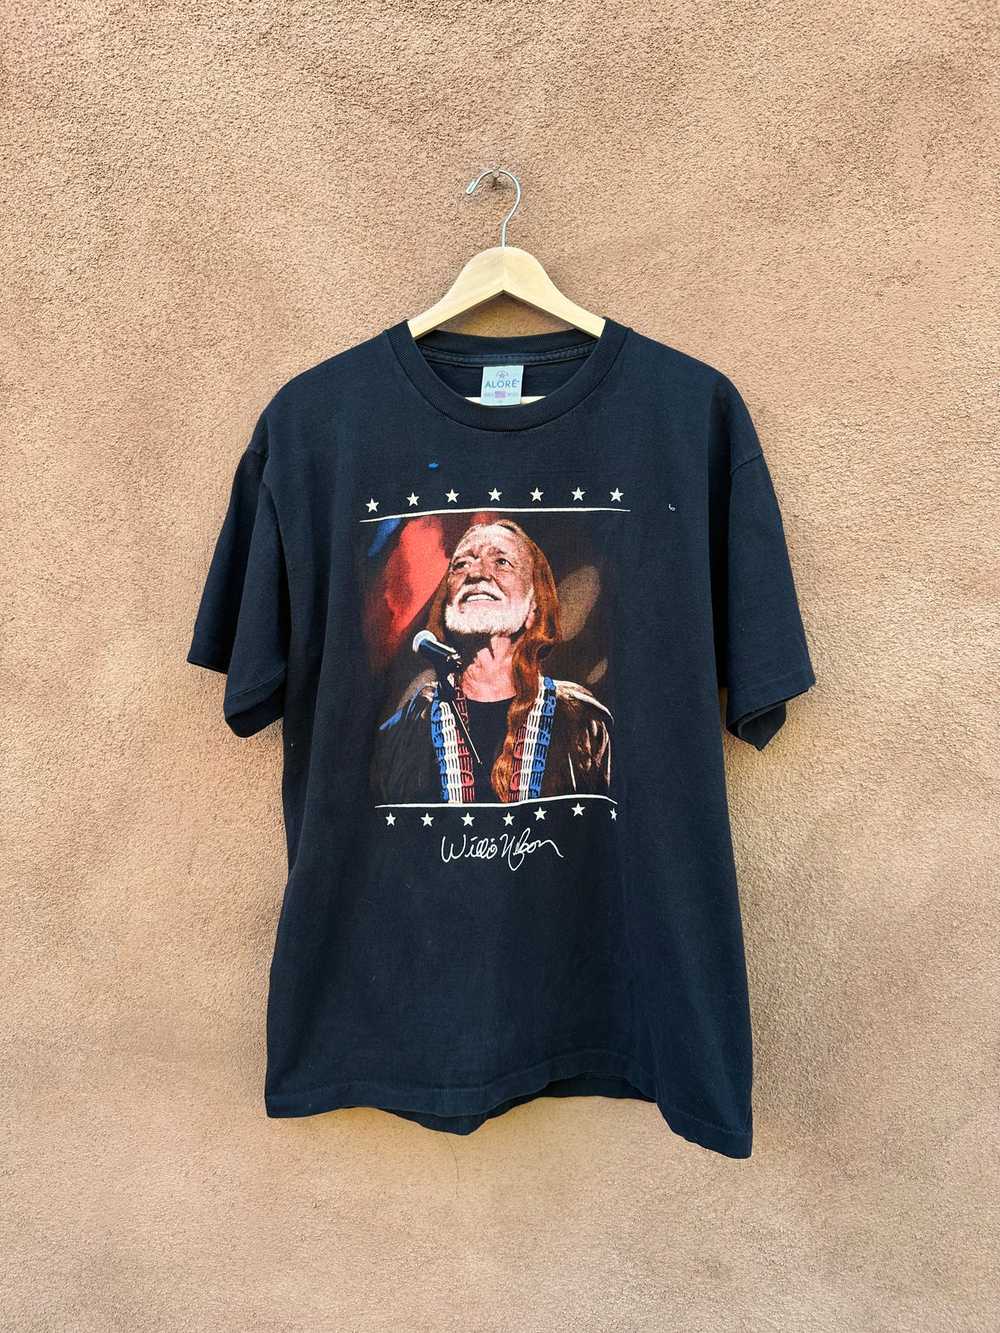 Willie Nelson Here Tonight T-shirt - image 1